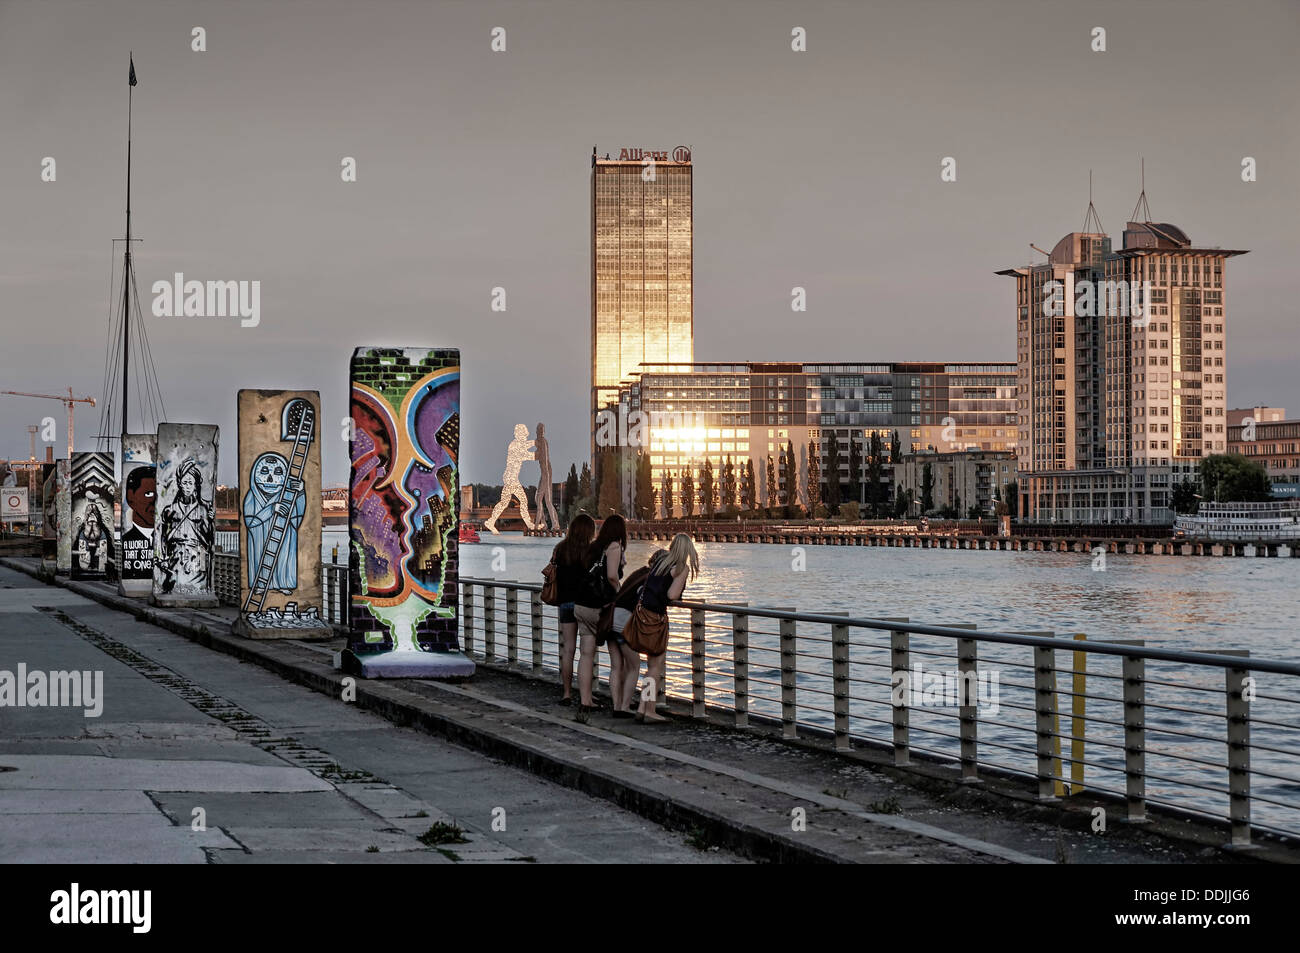 Wall pieces in Friedrichshain , river Spree, Treptowers, Allianz building, Monecular Men Stock Photo